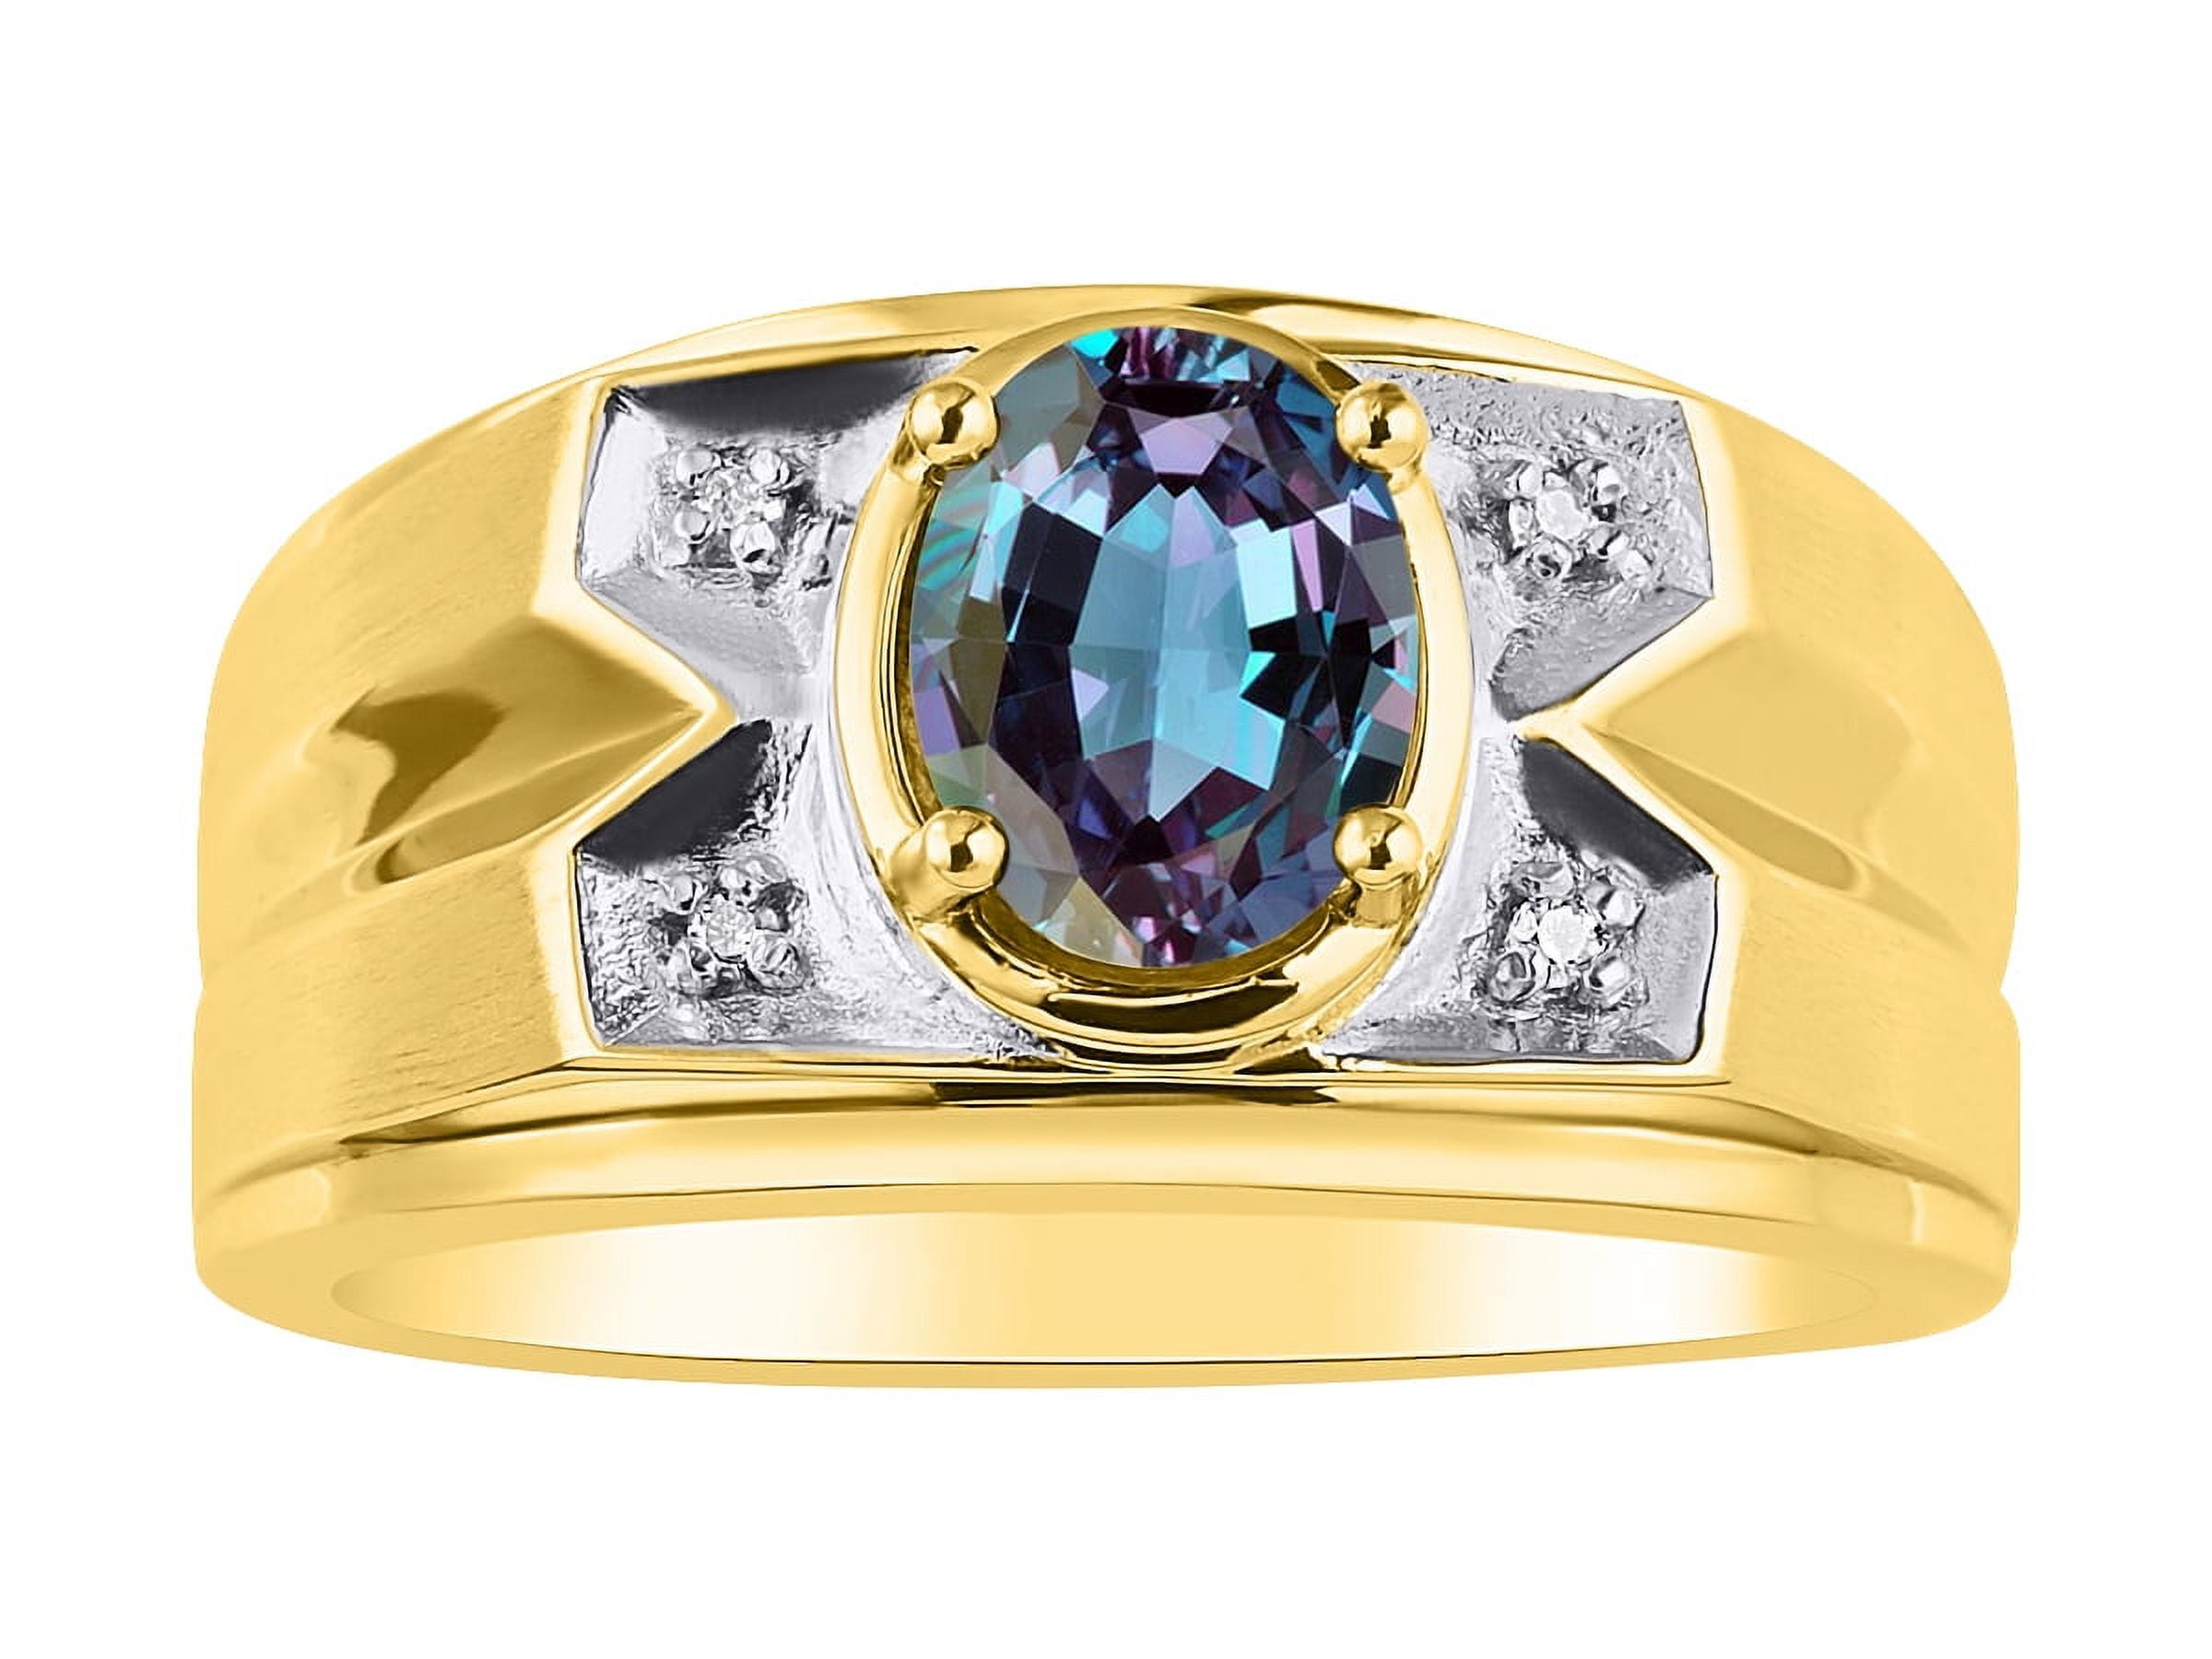 Rylos Mens Rings 14K Yellow Gold Rings Classic Designer Style 8X6MM Oval  Gemstone & Diamond Ring Alexandrite June Birthstone Rings For Men, Men's  Rings, Gold Rings Sizes 8,9,10,11,12,13|Amazon.com